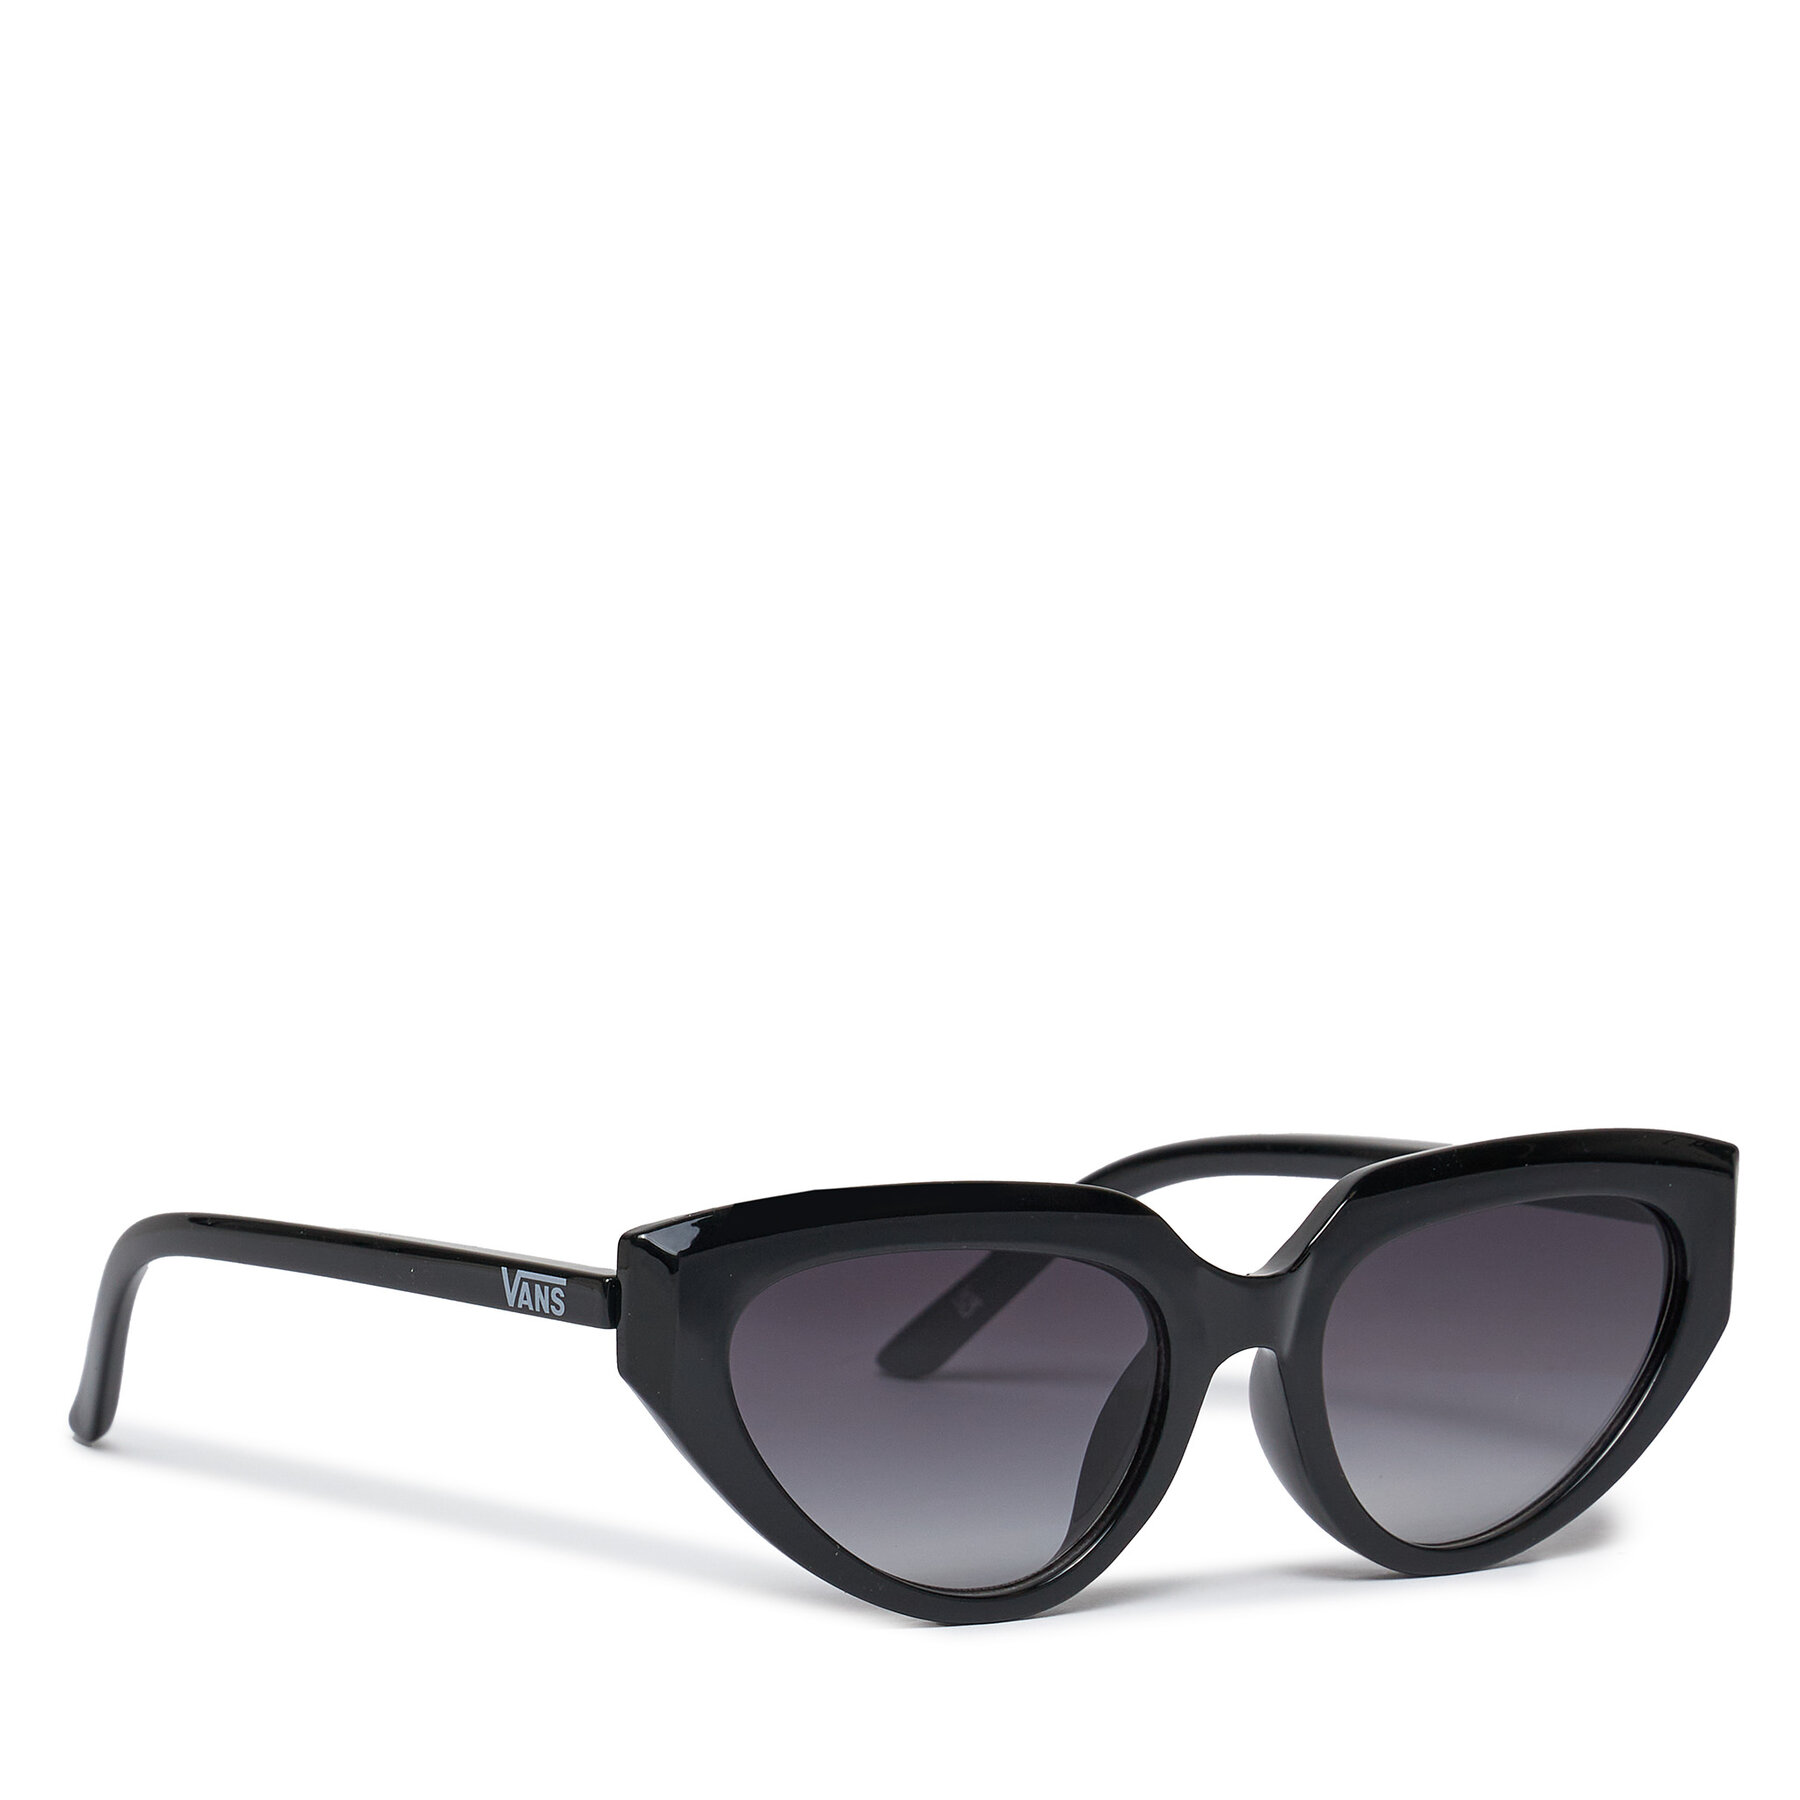 Sonnenbrillen Vans Shelby Sunglasses VN000GN0BLK1 Black von Vans